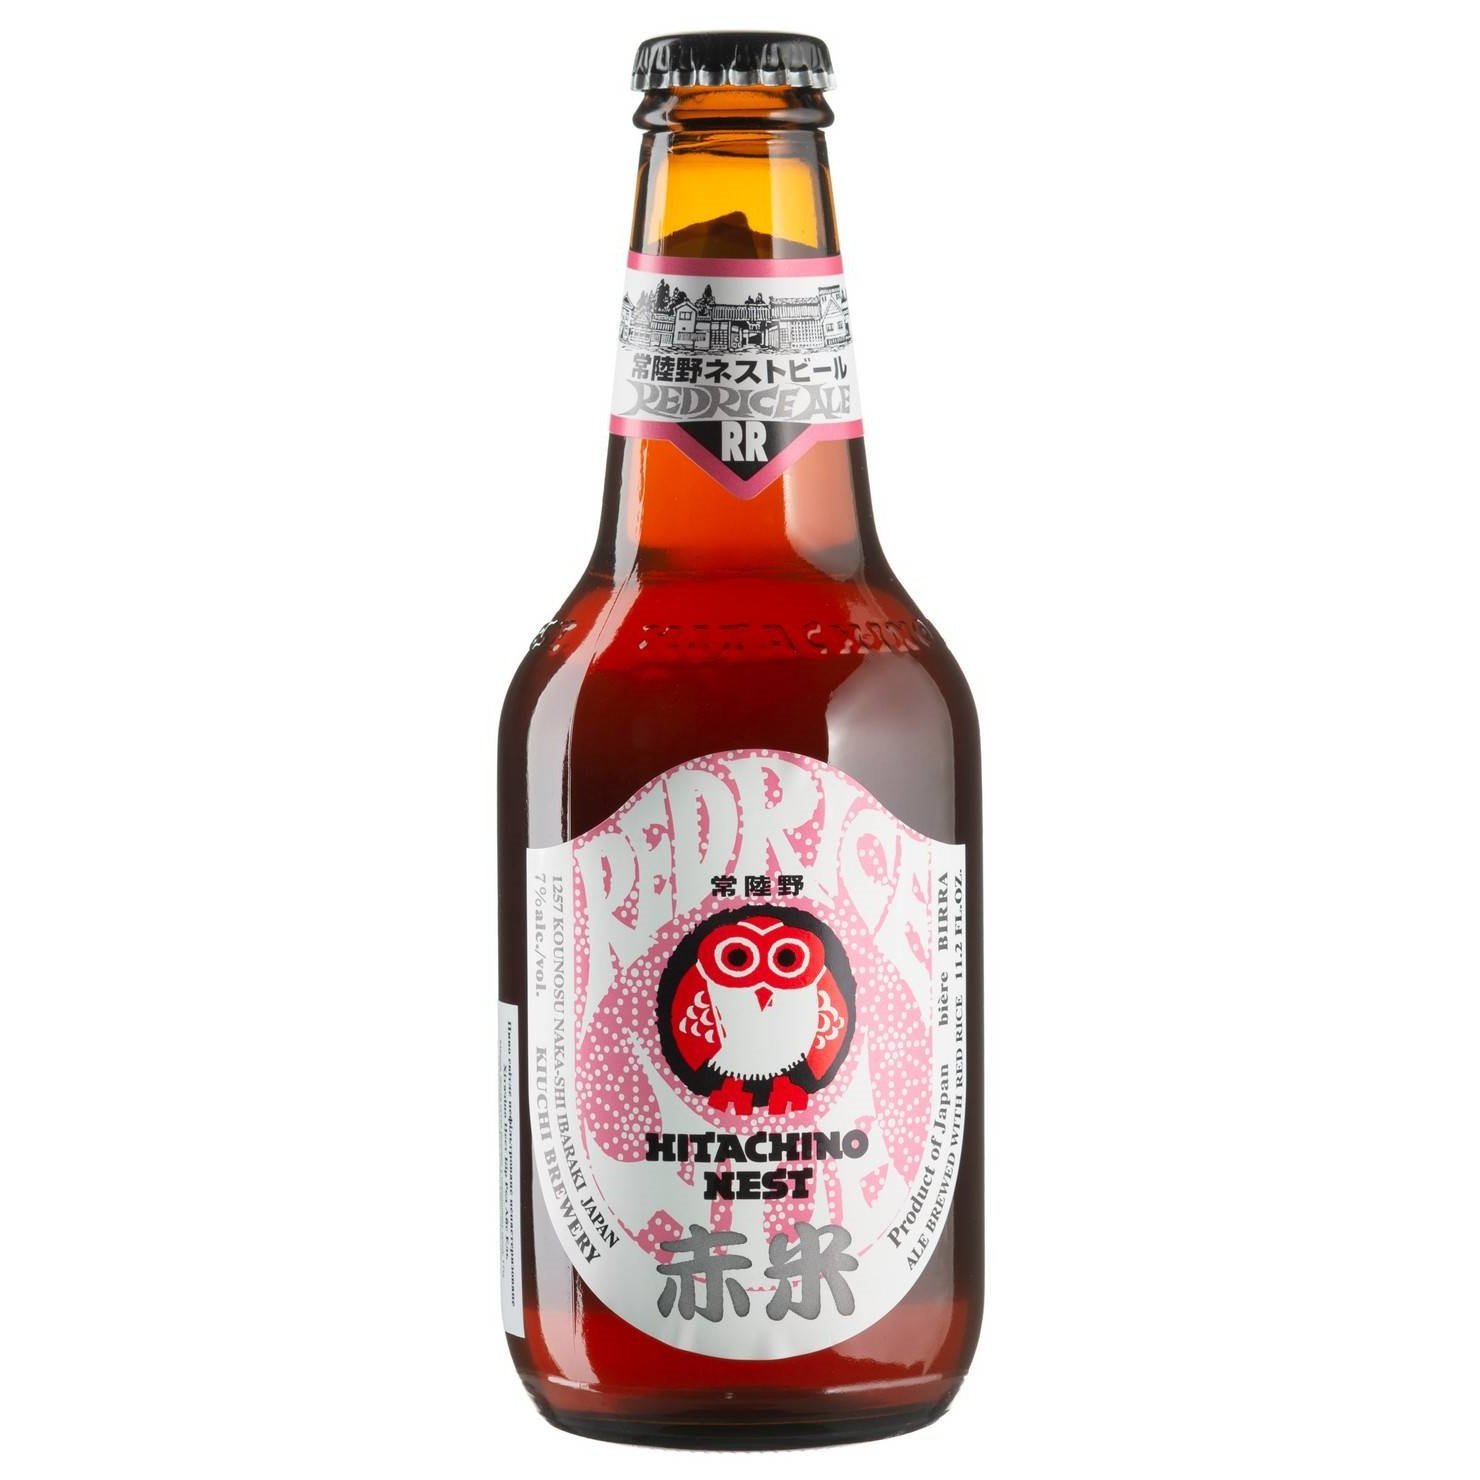 Пиво Hitachino Nest Beer Red Rice Ale, светлое, нефильтрованное, 7% 0,33 л - фото 1